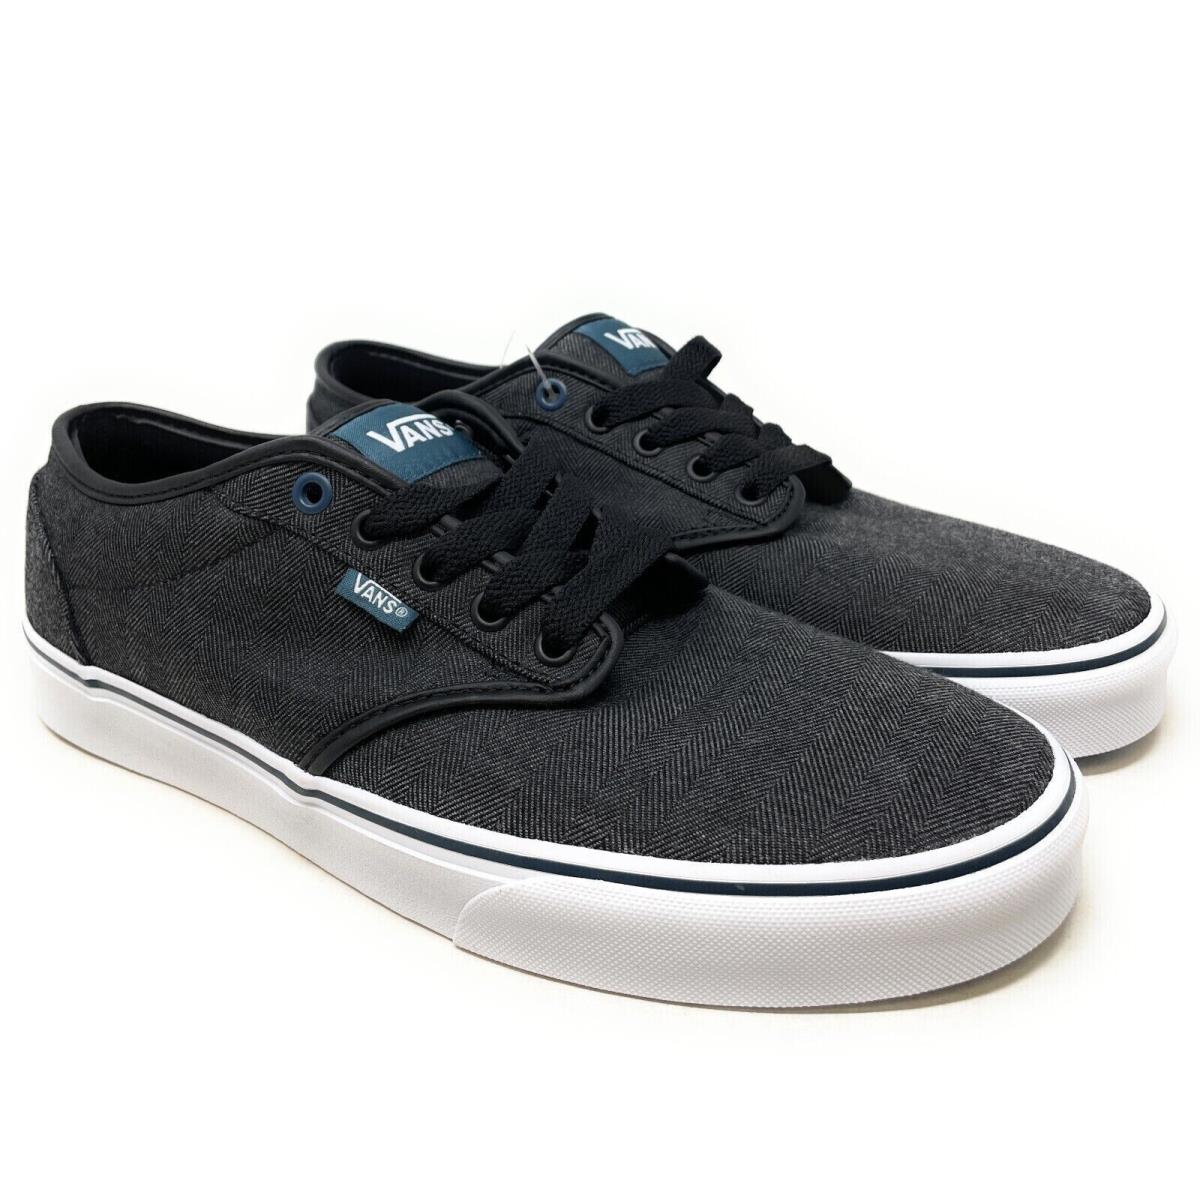 Vans Atwood Textile Black/orion Skate Shoes - Men Size 11/11.5/12/13